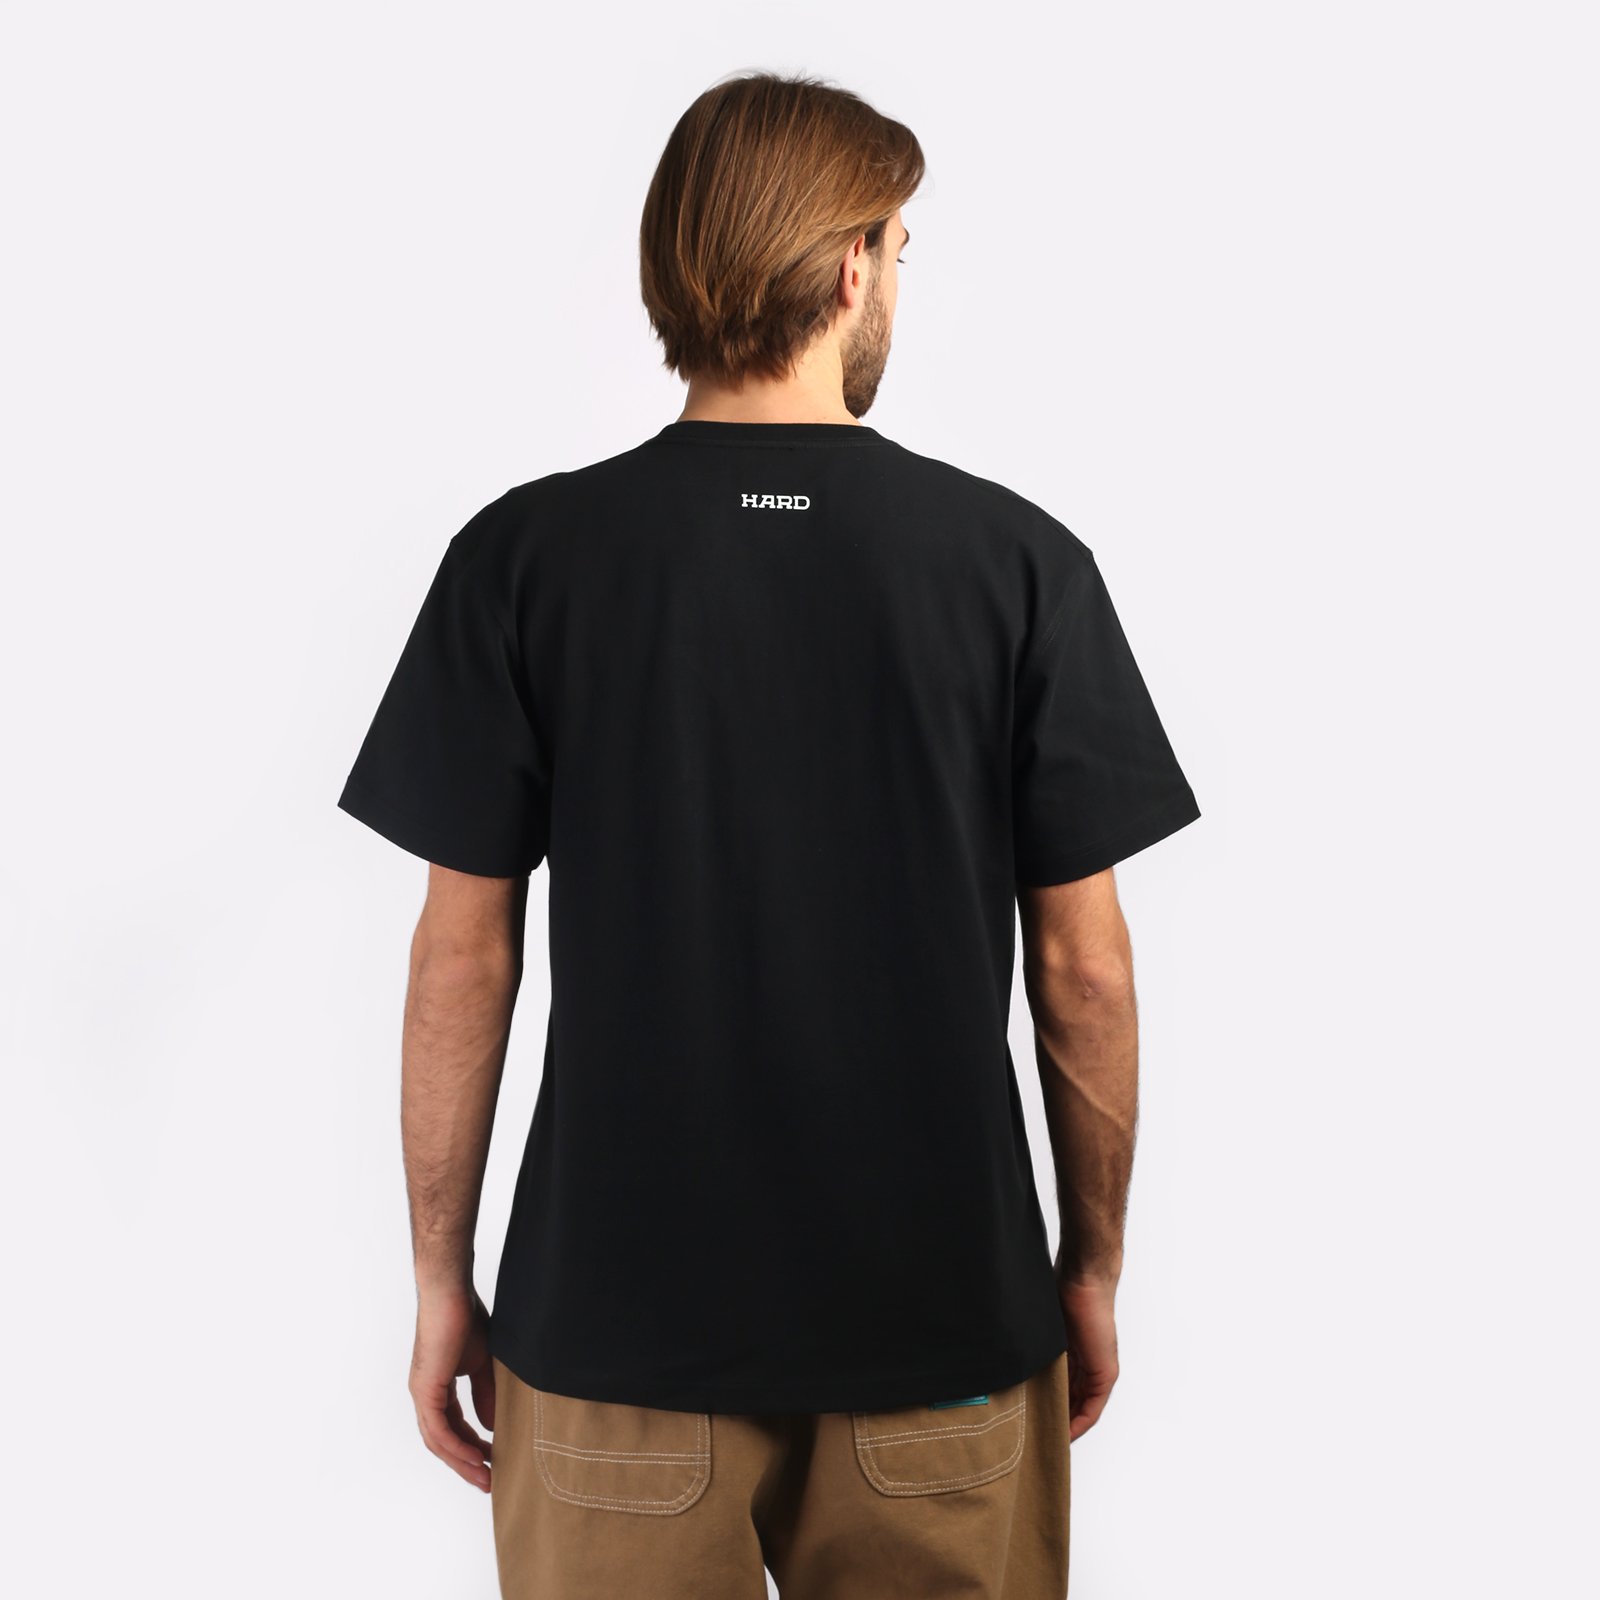 мужская футболка Hard Logo Tee  (Hrdtee-black)  - цена, описание, фото 2